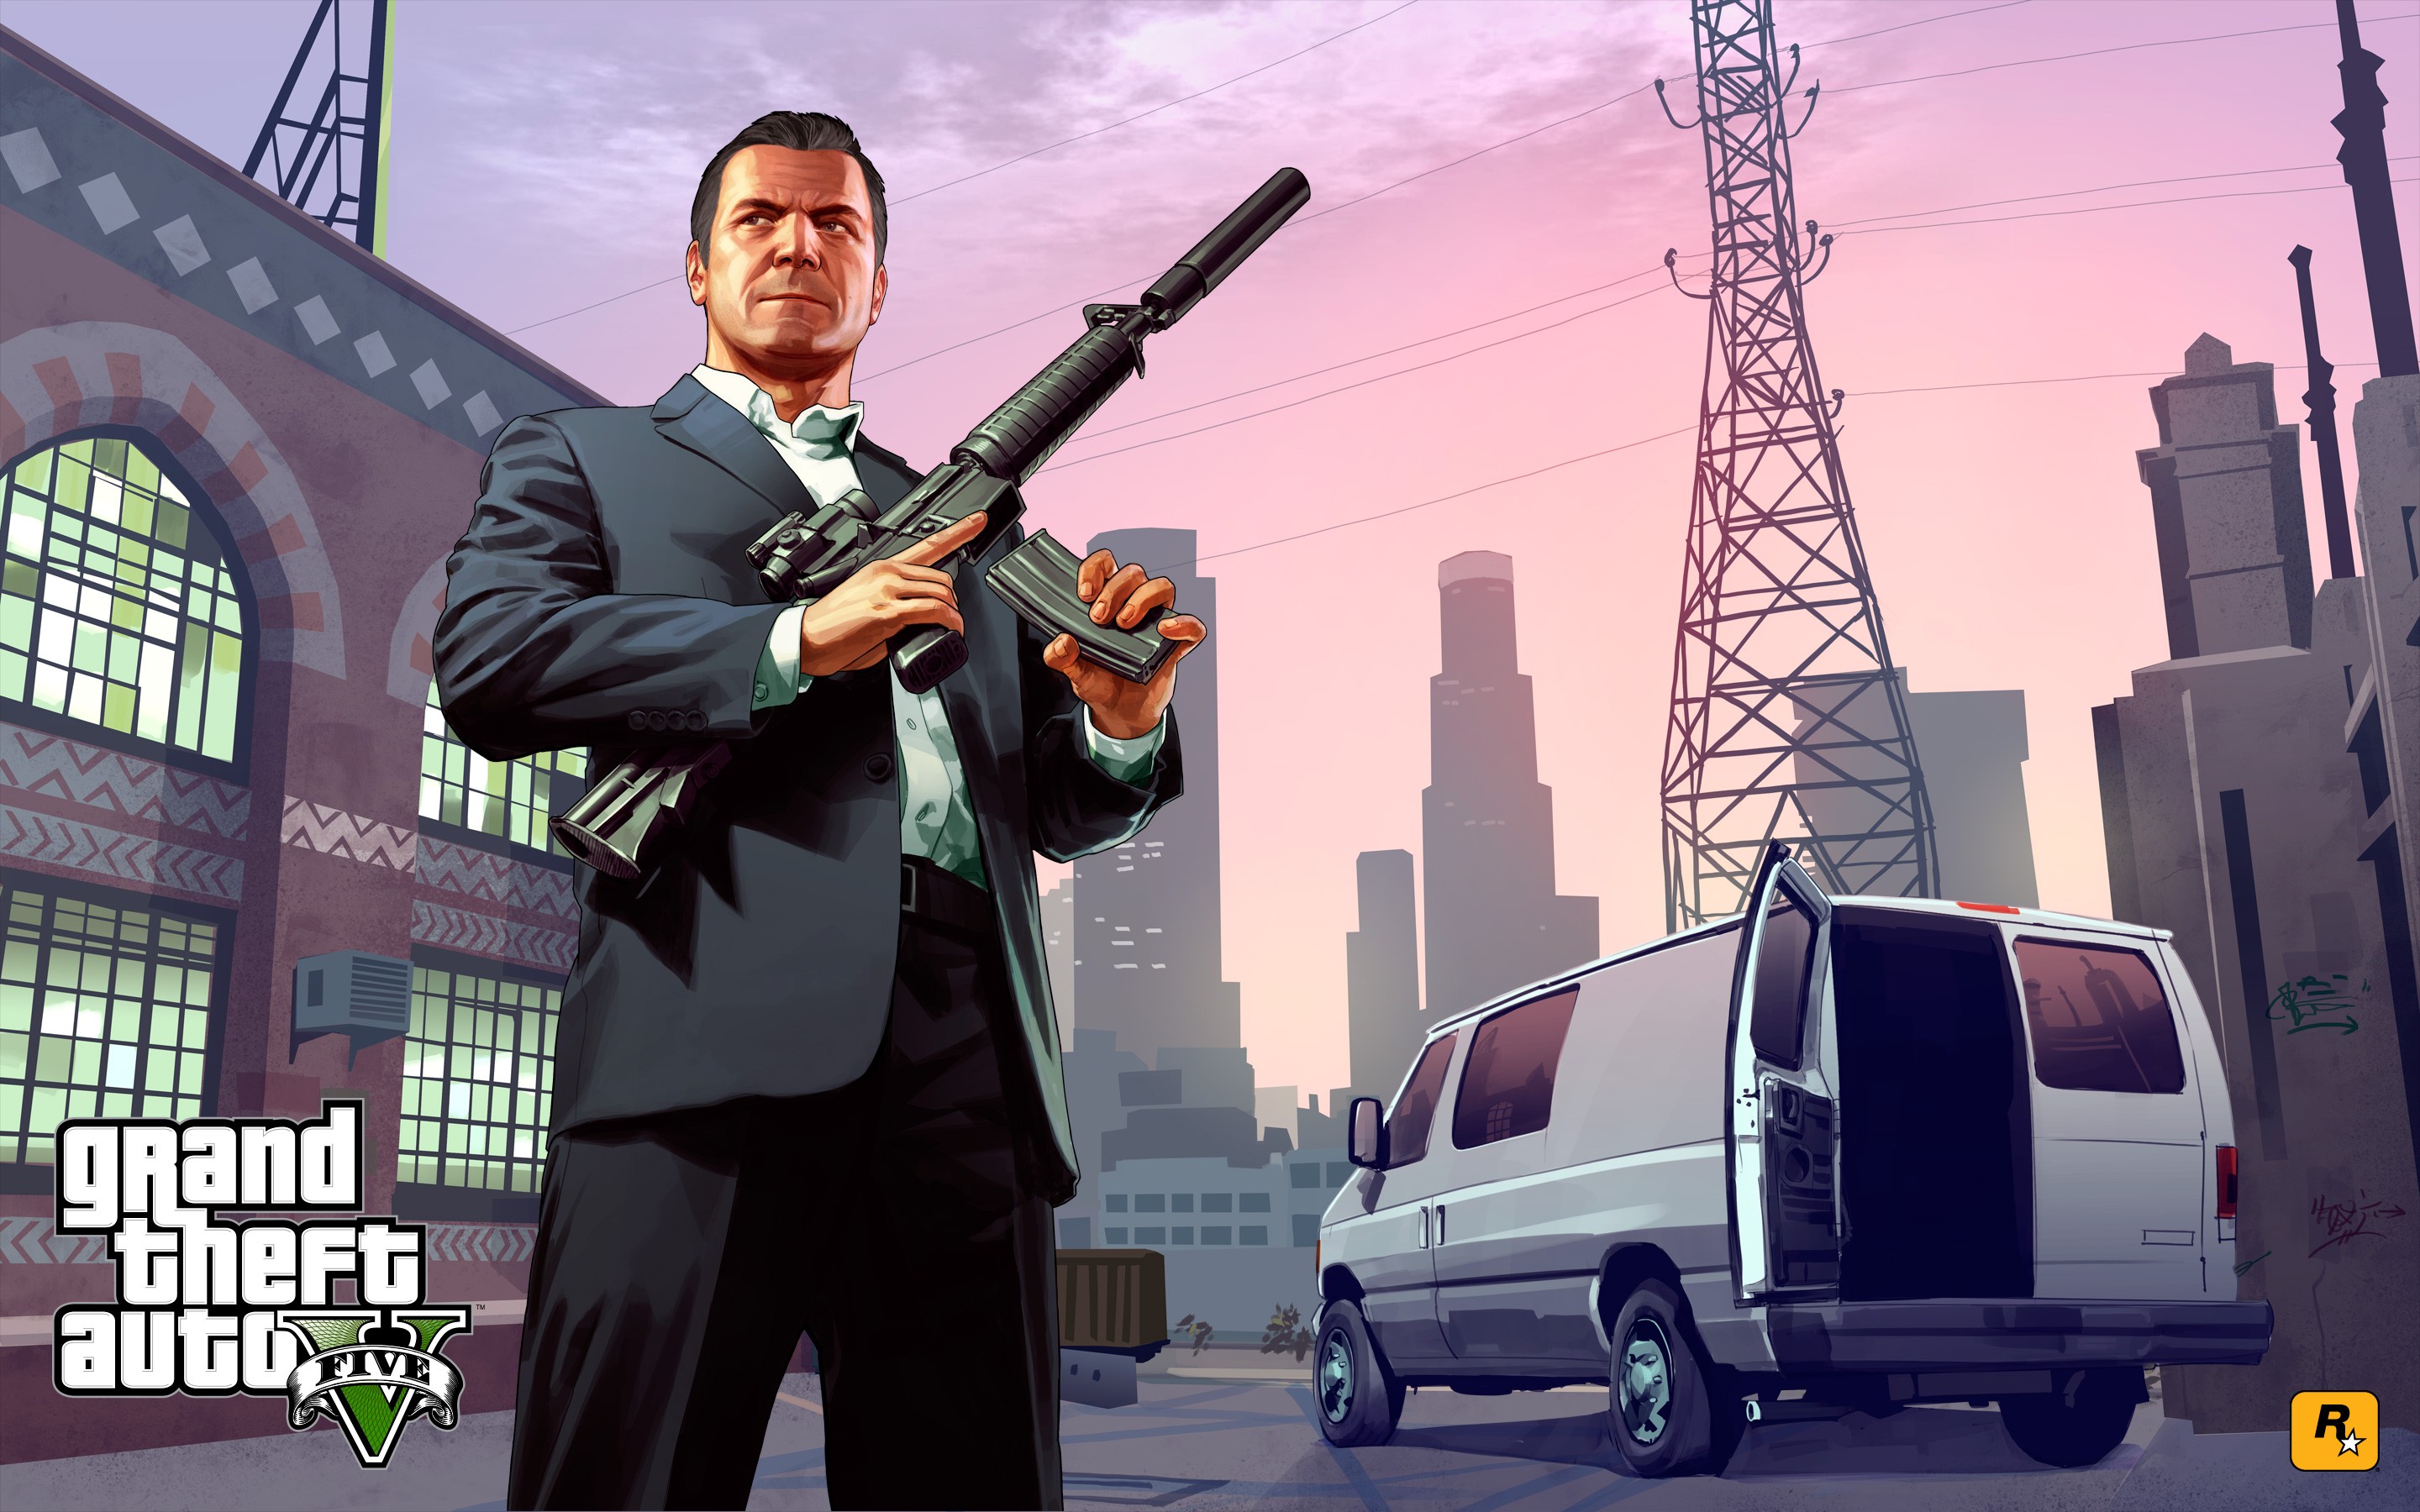 General 2880x1800 Grand Theft Auto V Grand Theft Auto video games van PC gaming video game men Rockstar Games video game art machine gun